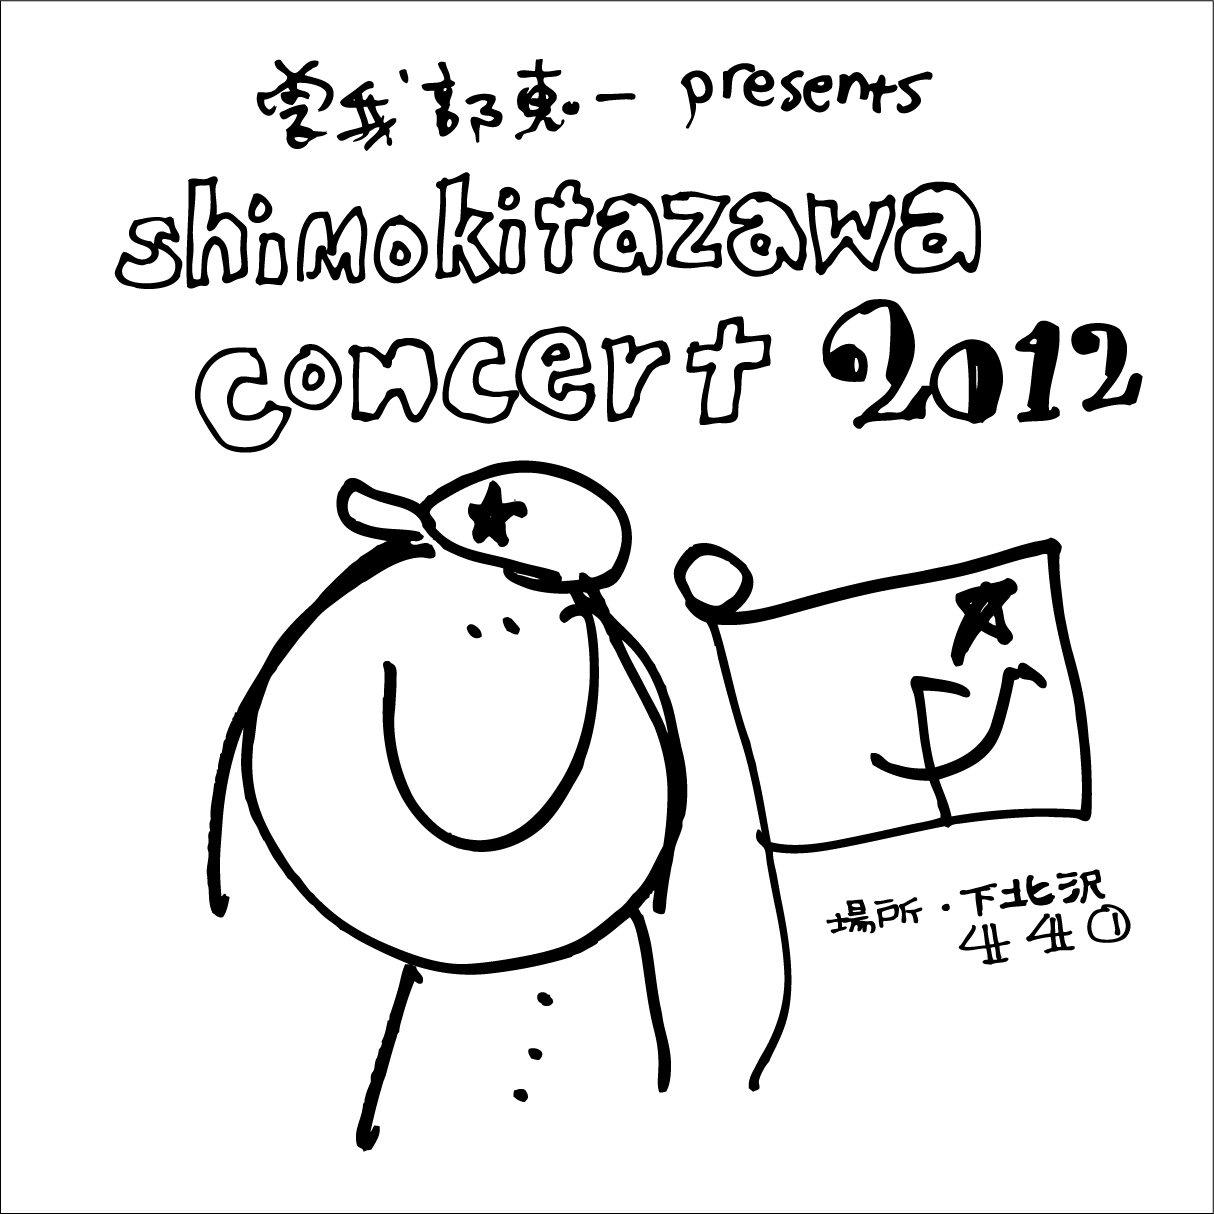 ＜曽我部恵一 presents "shimokitazawa concert" 第二十四夜＞ @東京 下北沢 440 (four forty)